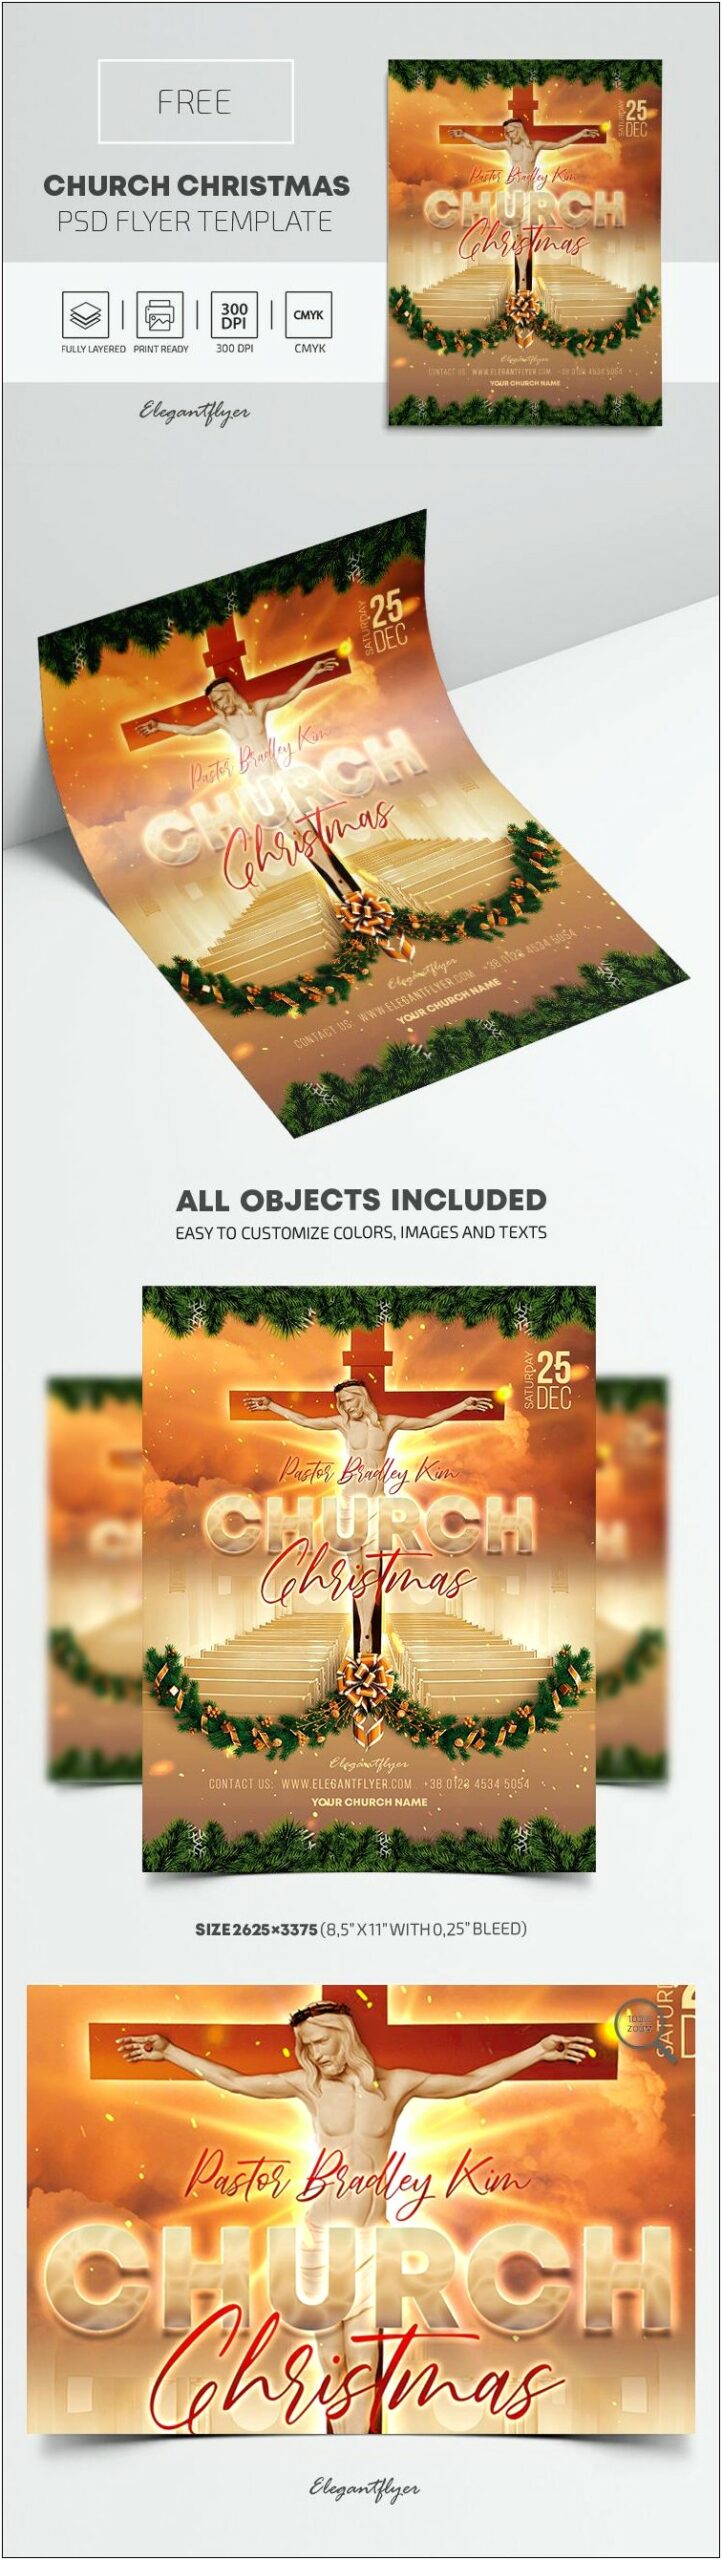 Church Christmas Play Flyer Template Free